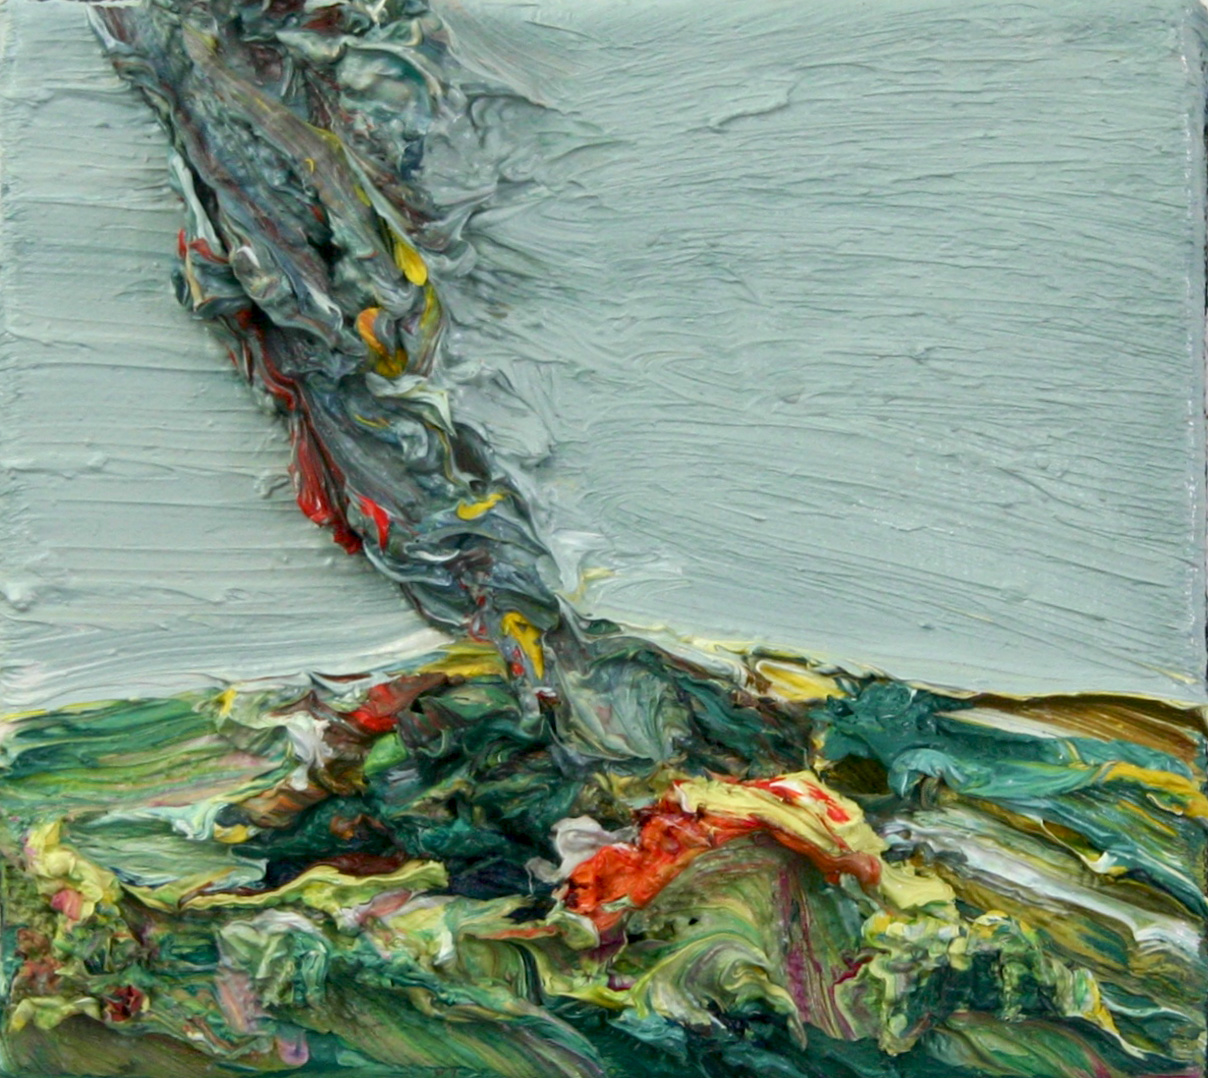 Harry Meyer, RAUCH, 2008, Öl auf Leinwand, 18 cm x 20 cm, Preis auf Anfrage, mey013kü